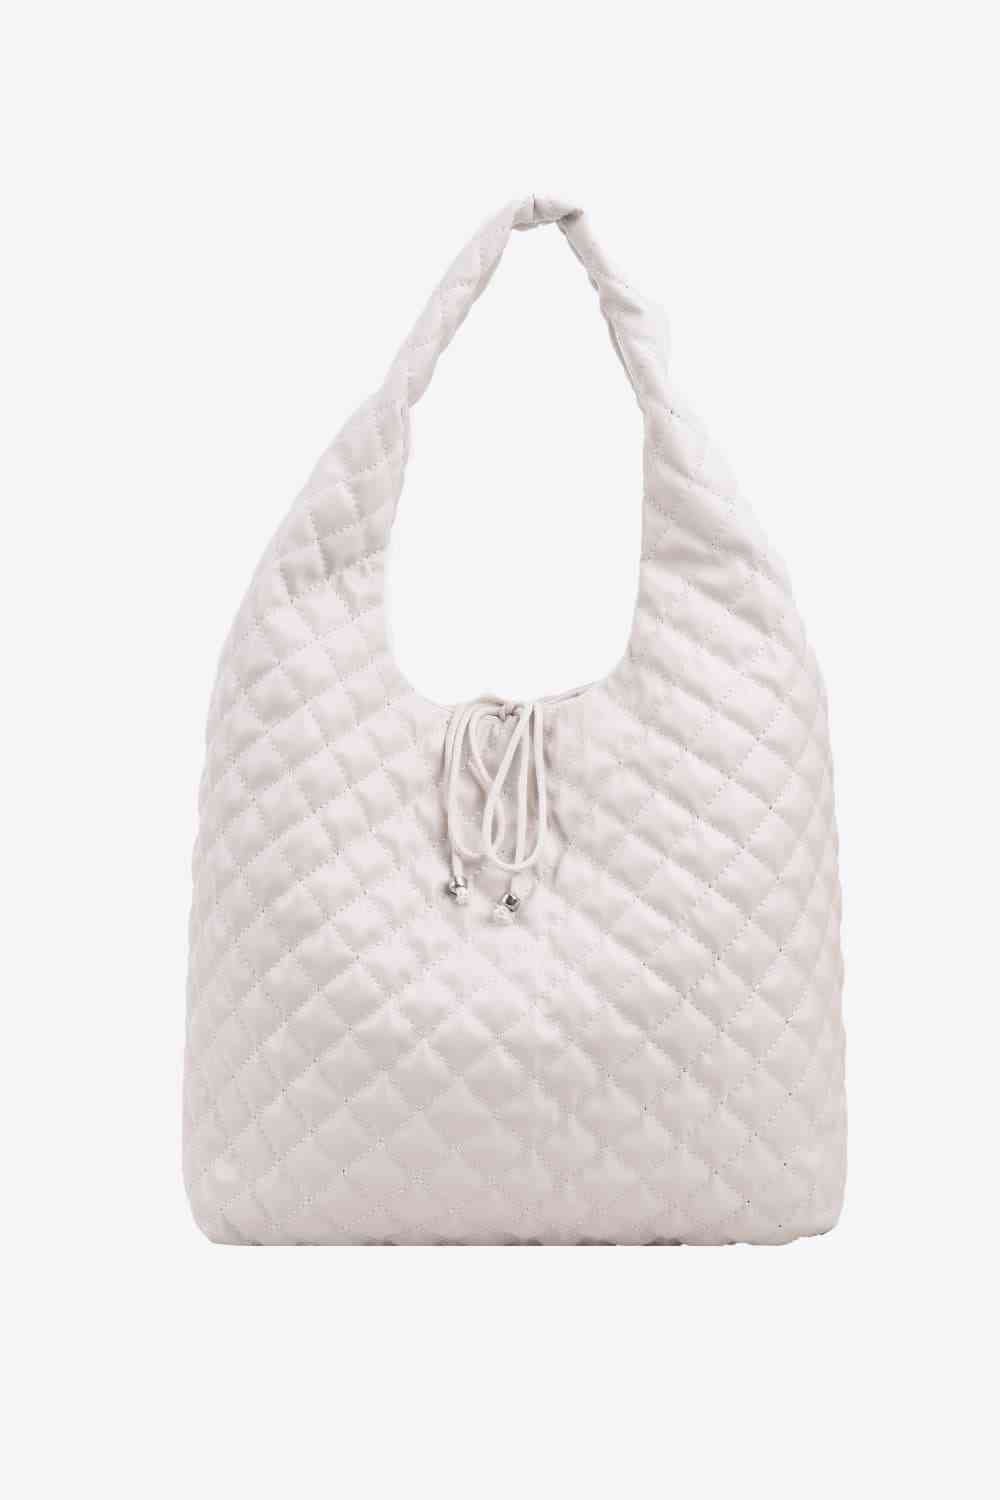 TEEK - Woven PU Leather Handbag BAG TEEK Trend White  